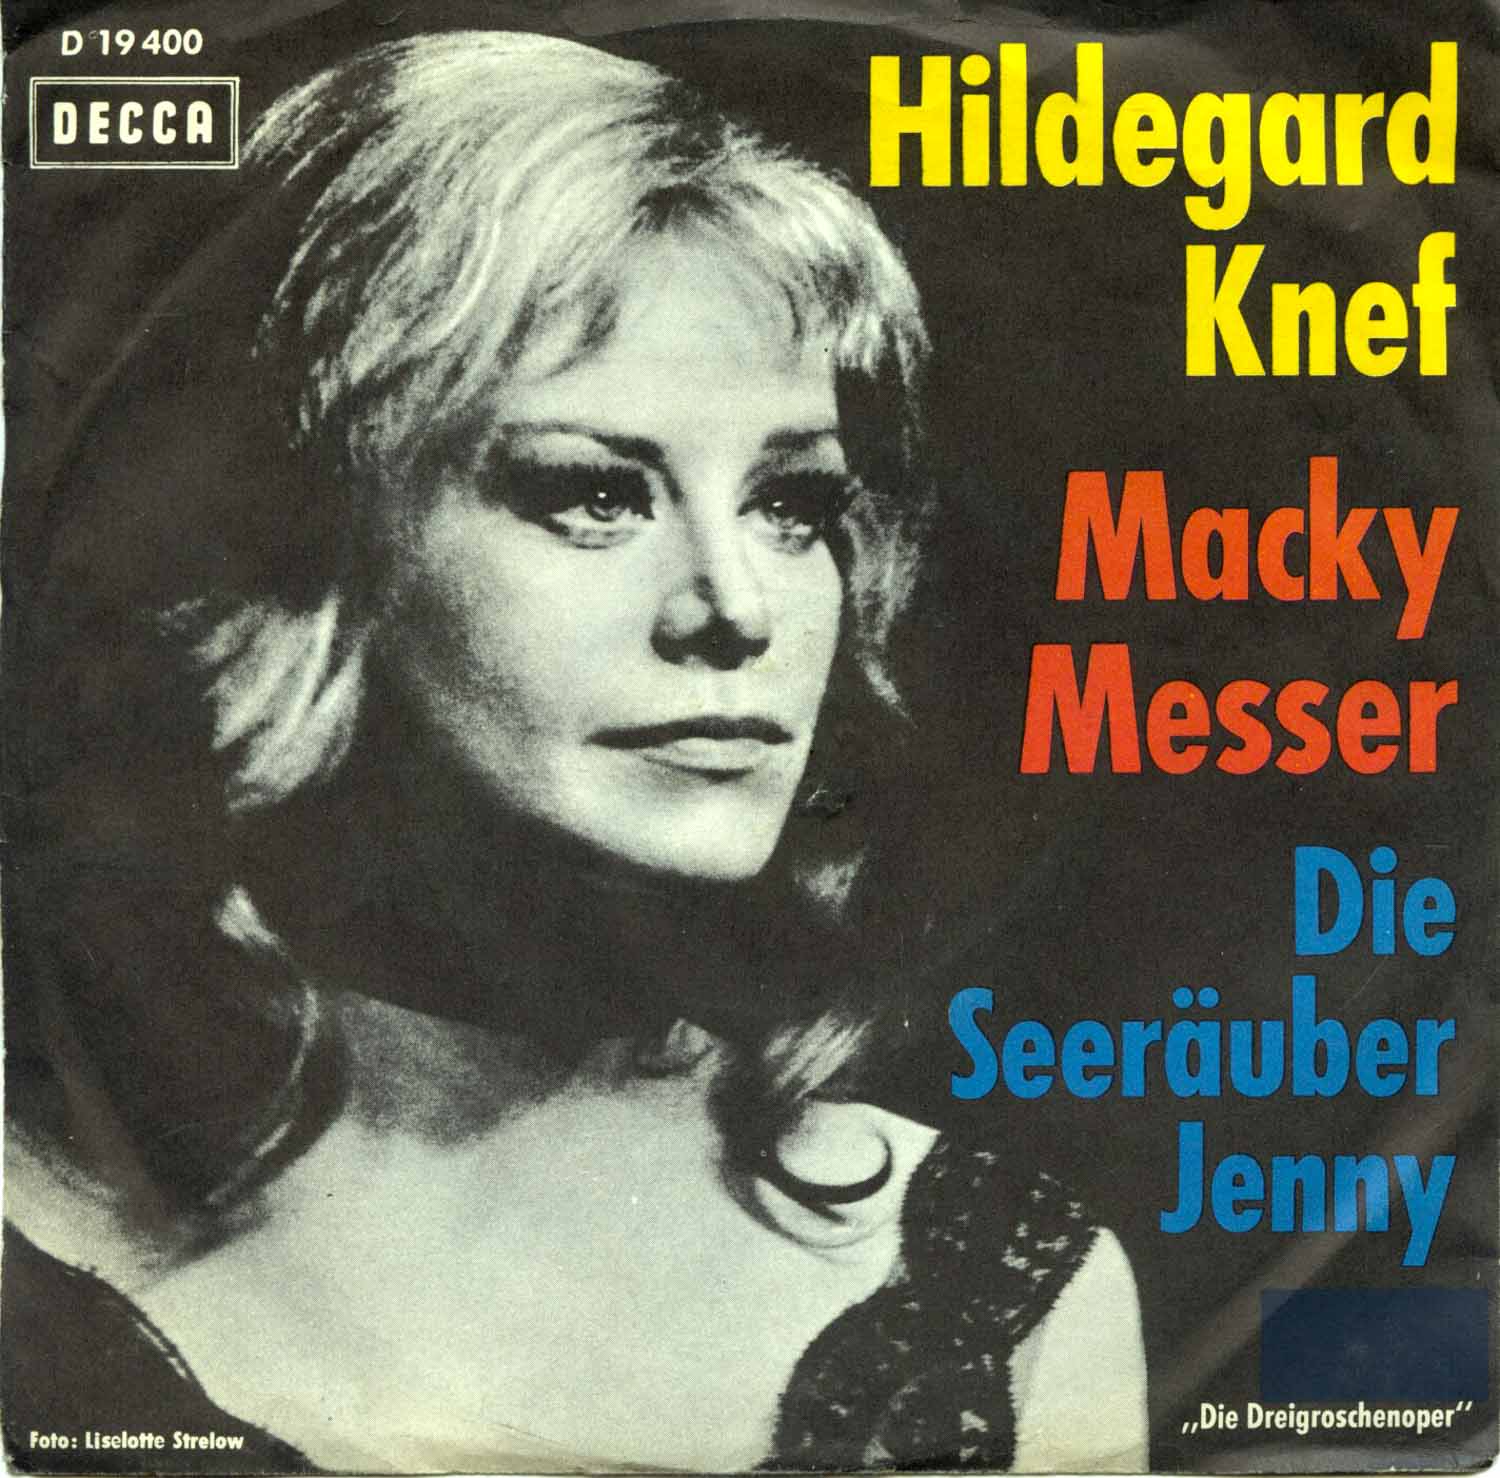 Hildegard Knef  Macky Messer / Die Seeräuber Jenny (D 19 400)  *Single 7'' (Vinyl)*. 